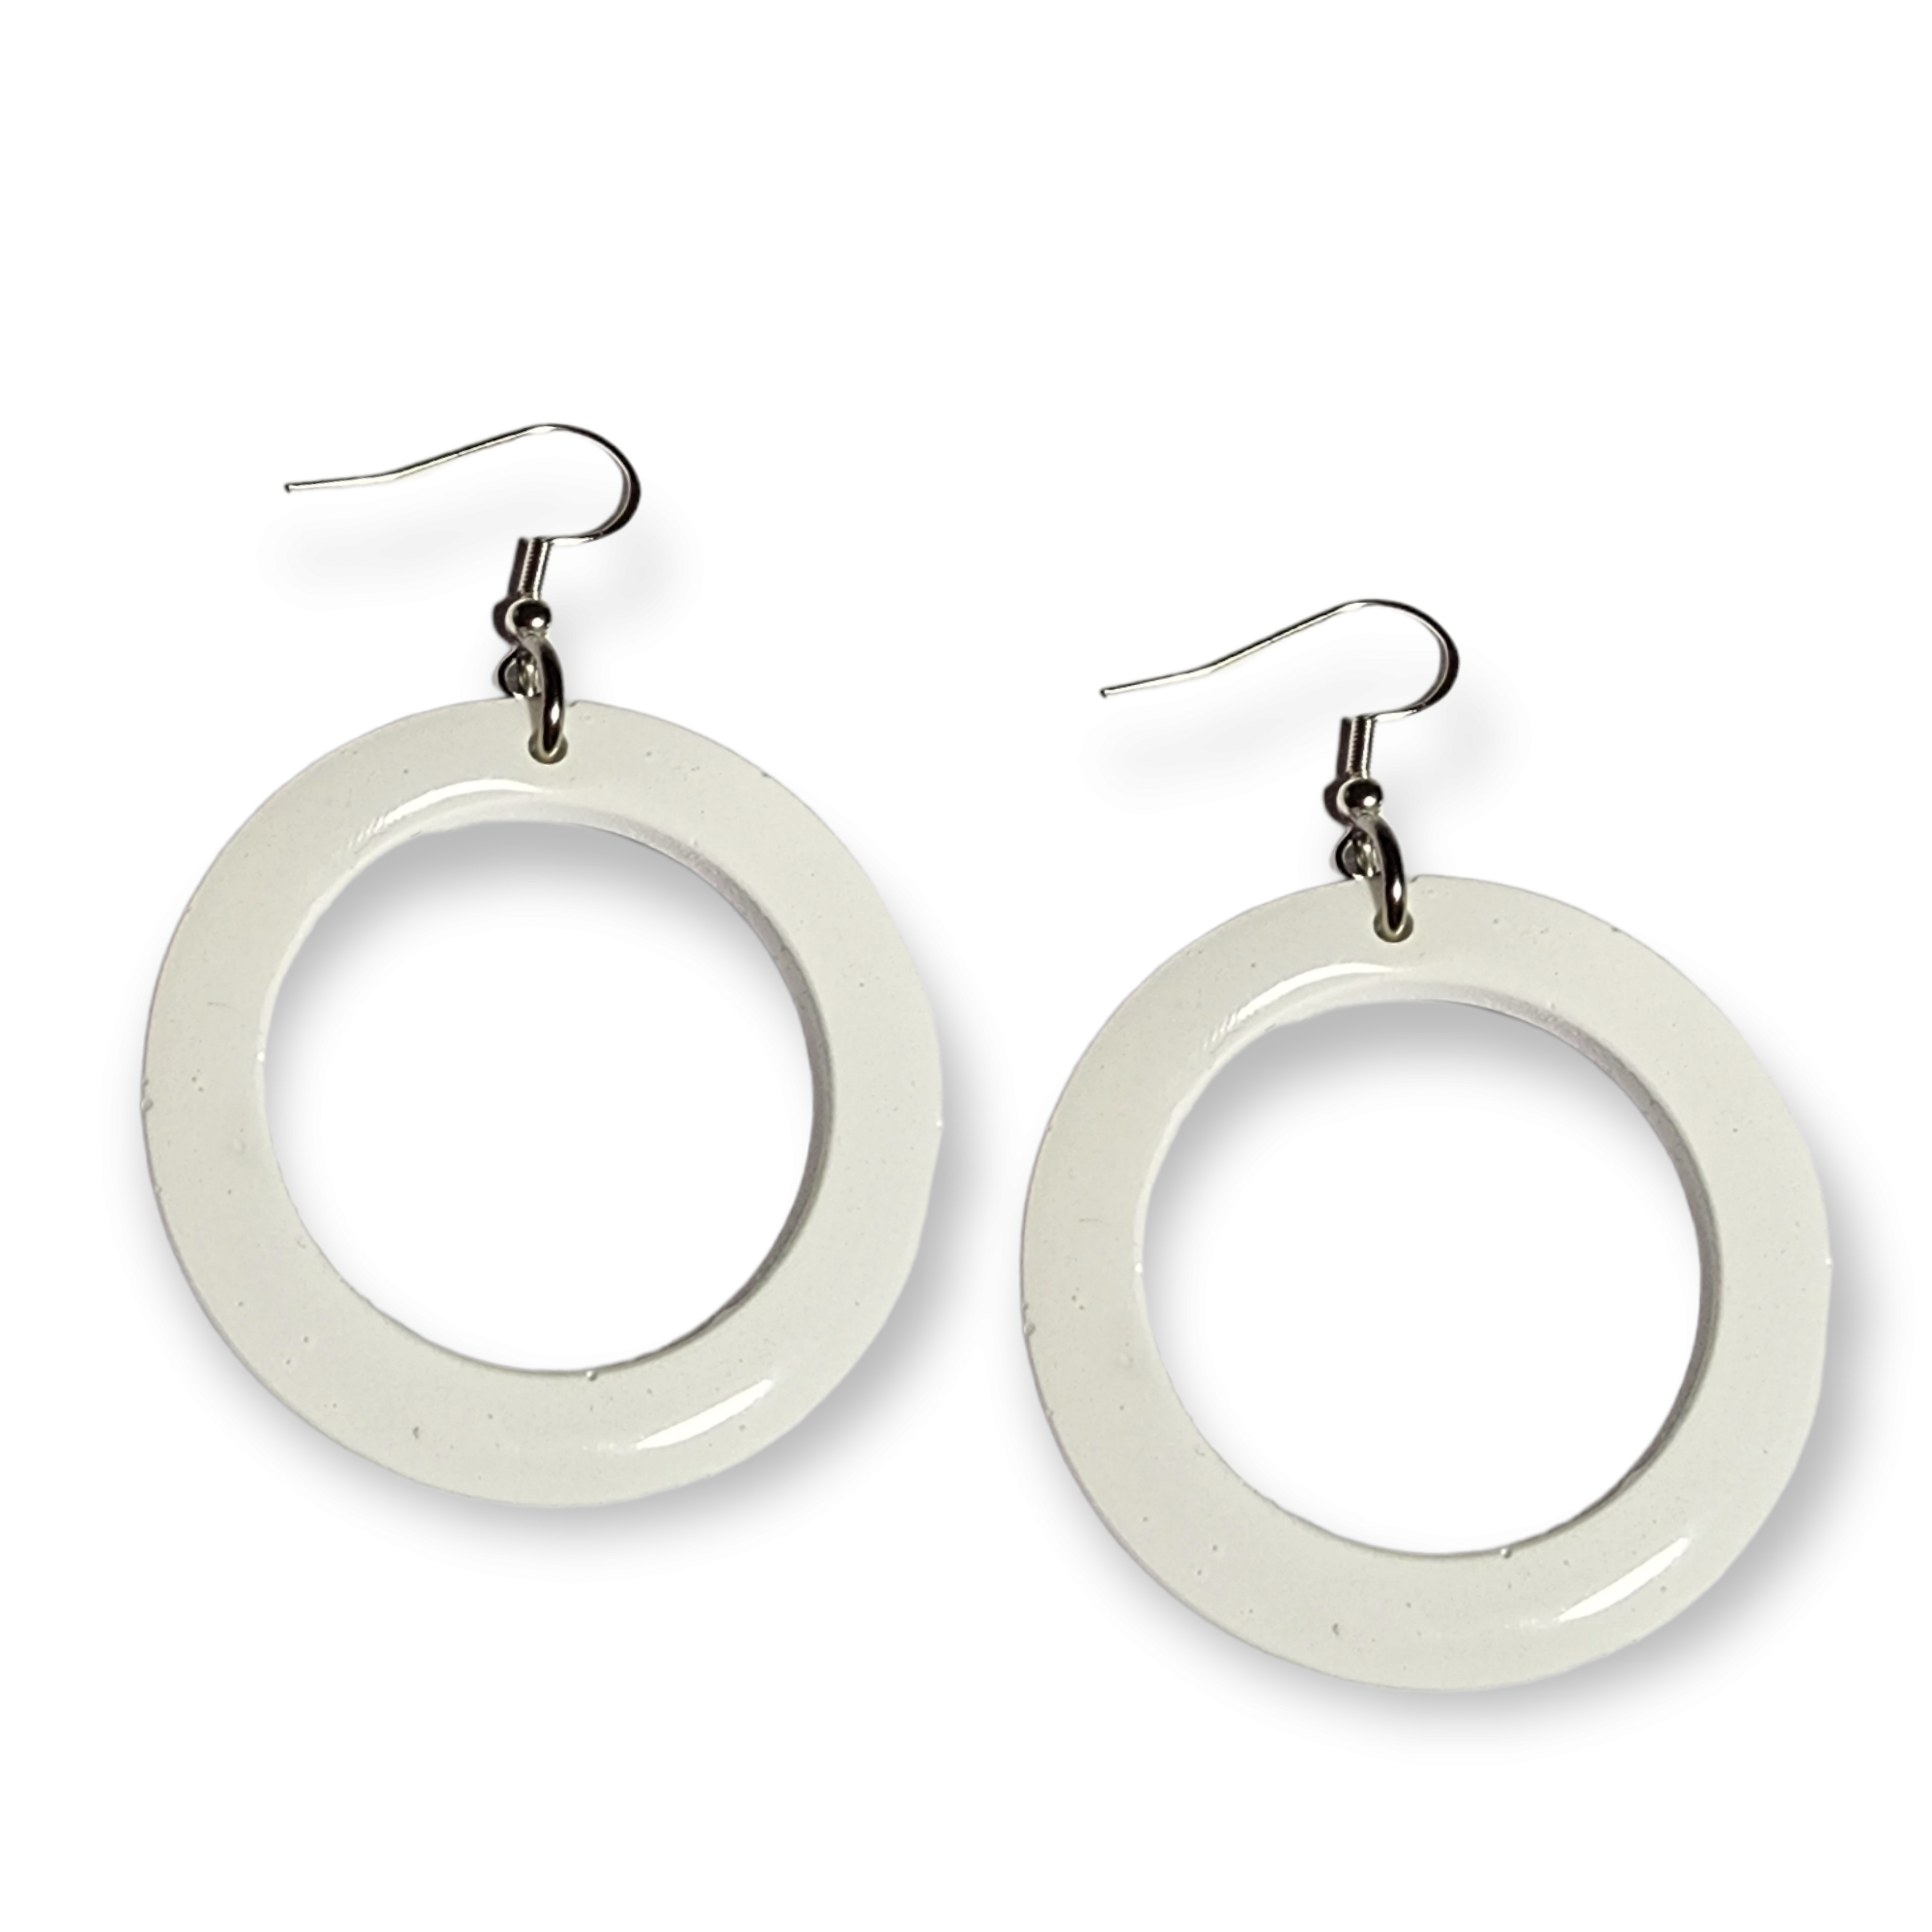 White round circle earrings